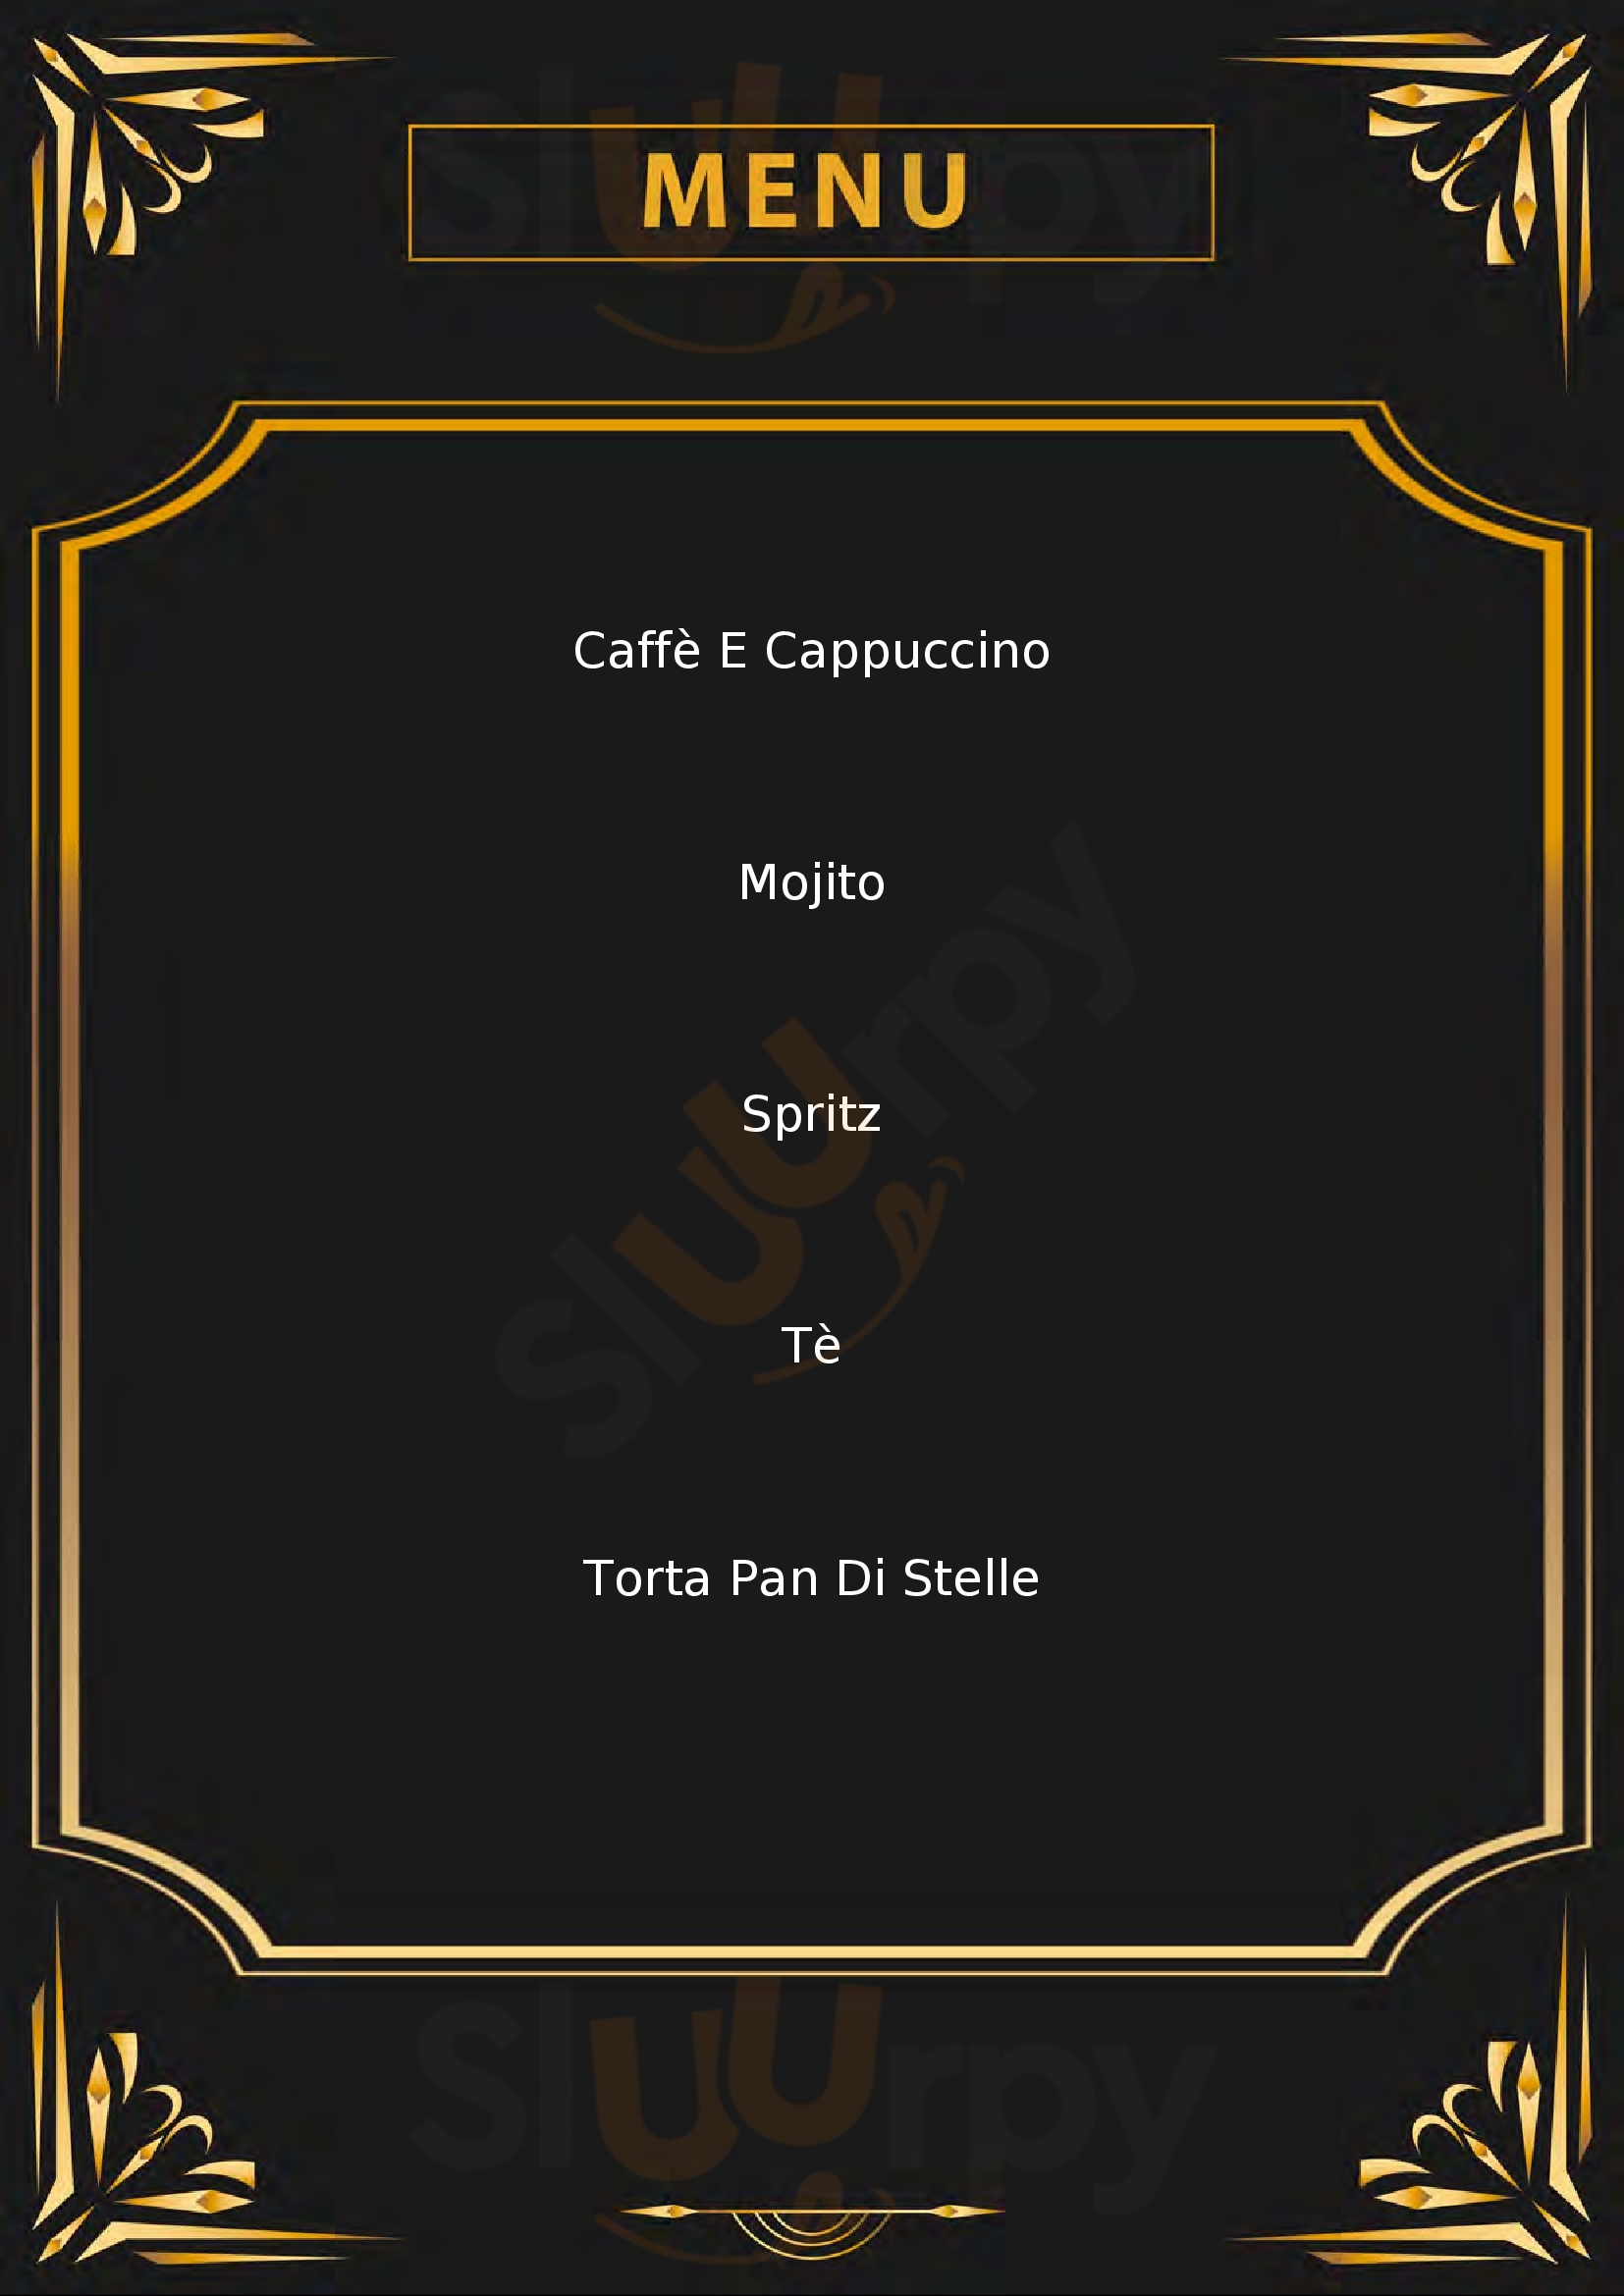 Movida Kafe Giugliano in Campania menù 1 pagina